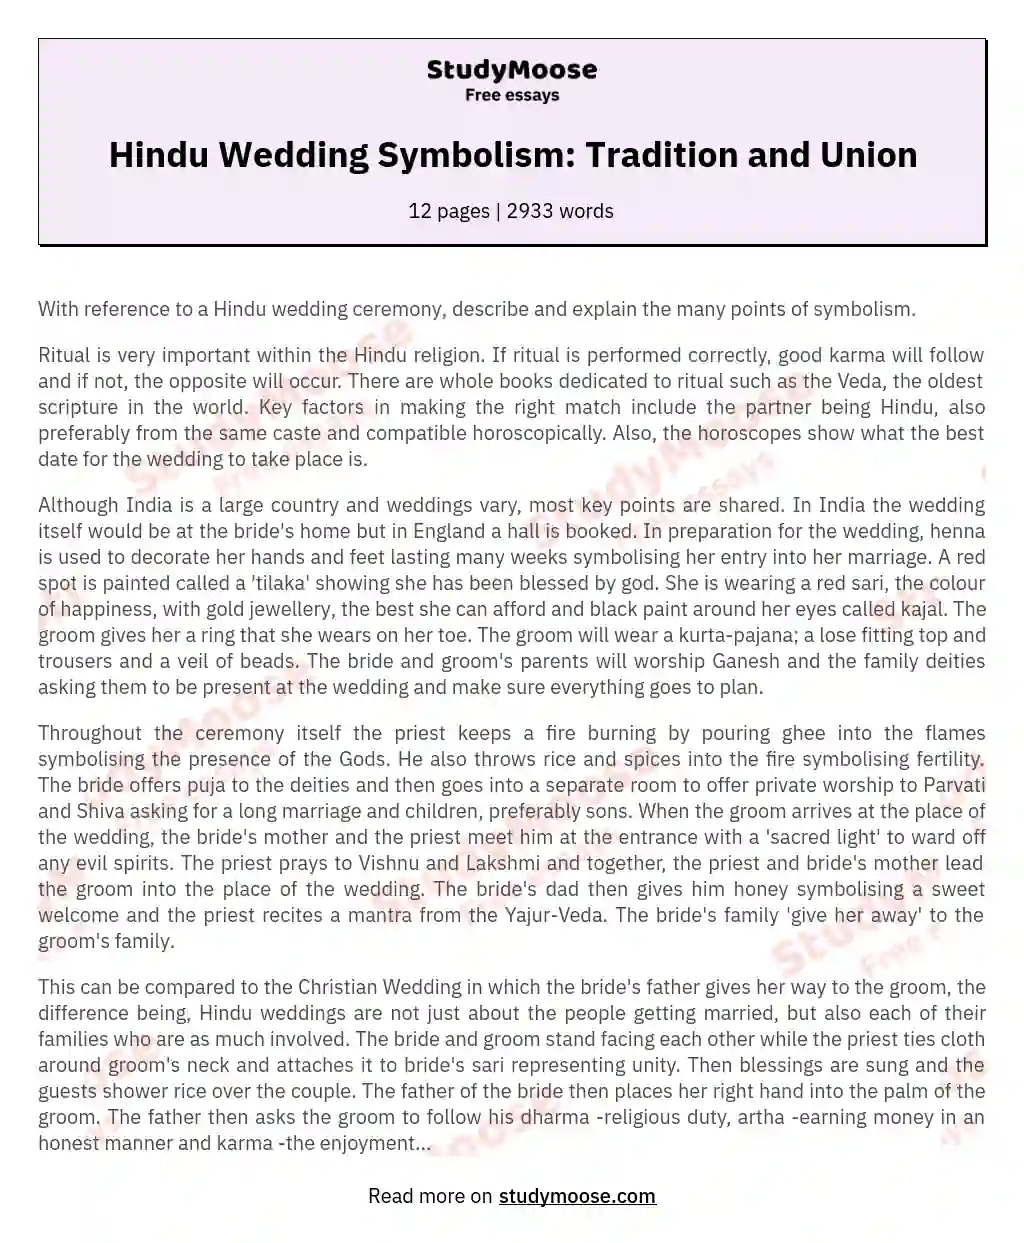 Hindu Wedding Symbolism: Tradition and Union essay